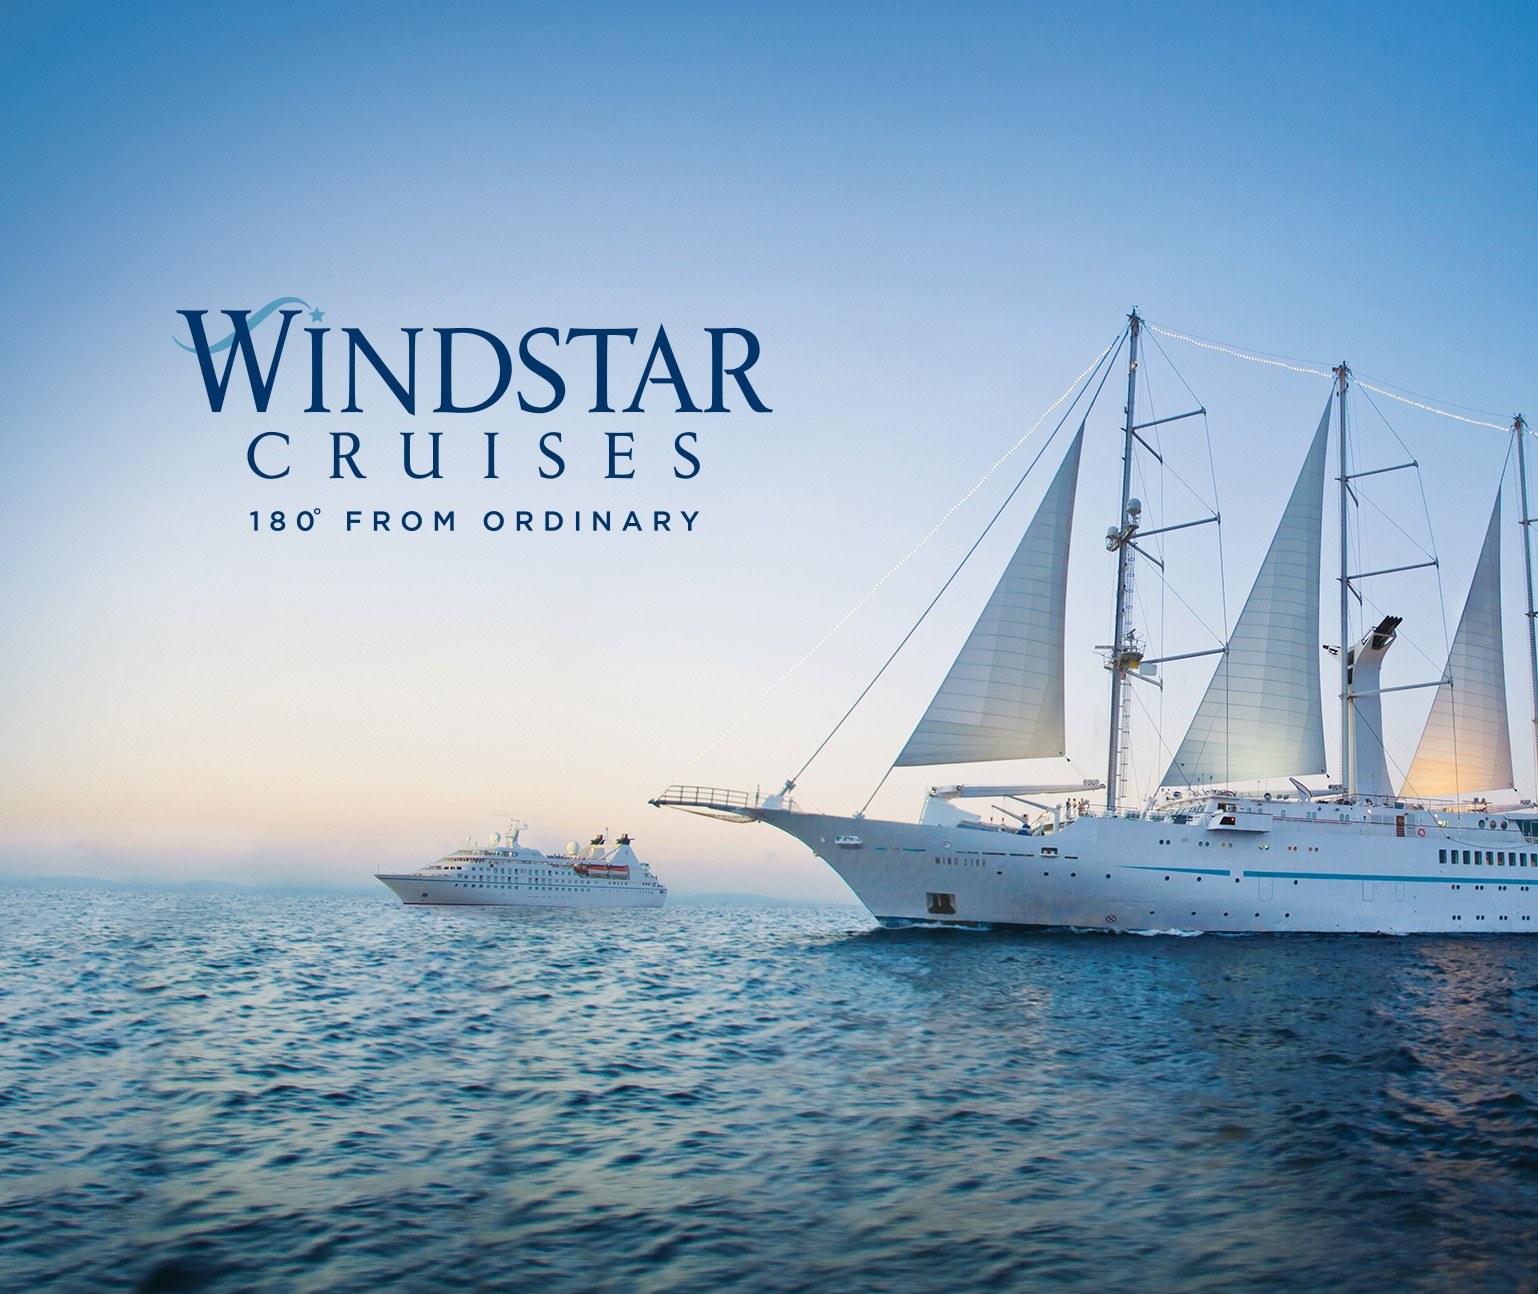 Large cruise ship with sails and Windstar Cruises logo